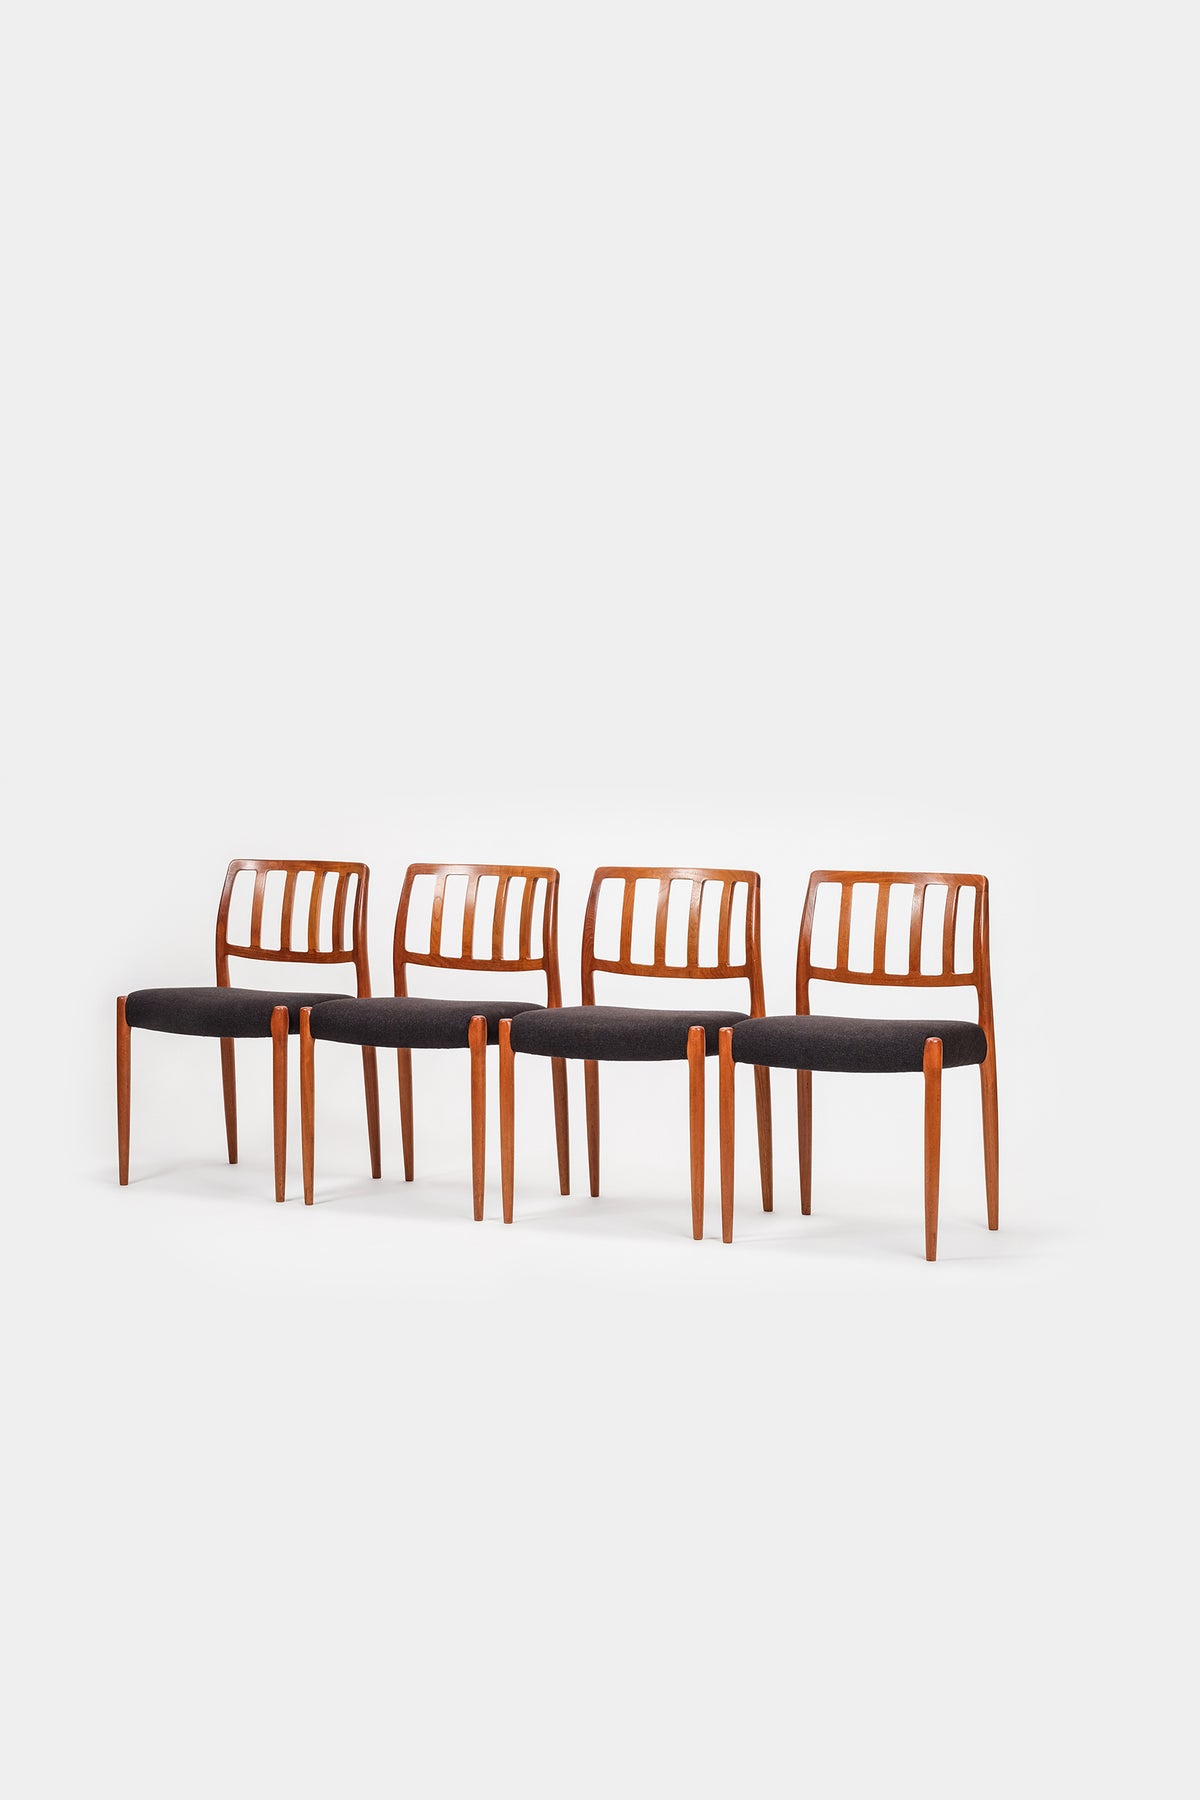 4 Niels Otto Møller Chairs, Model 84, 60s